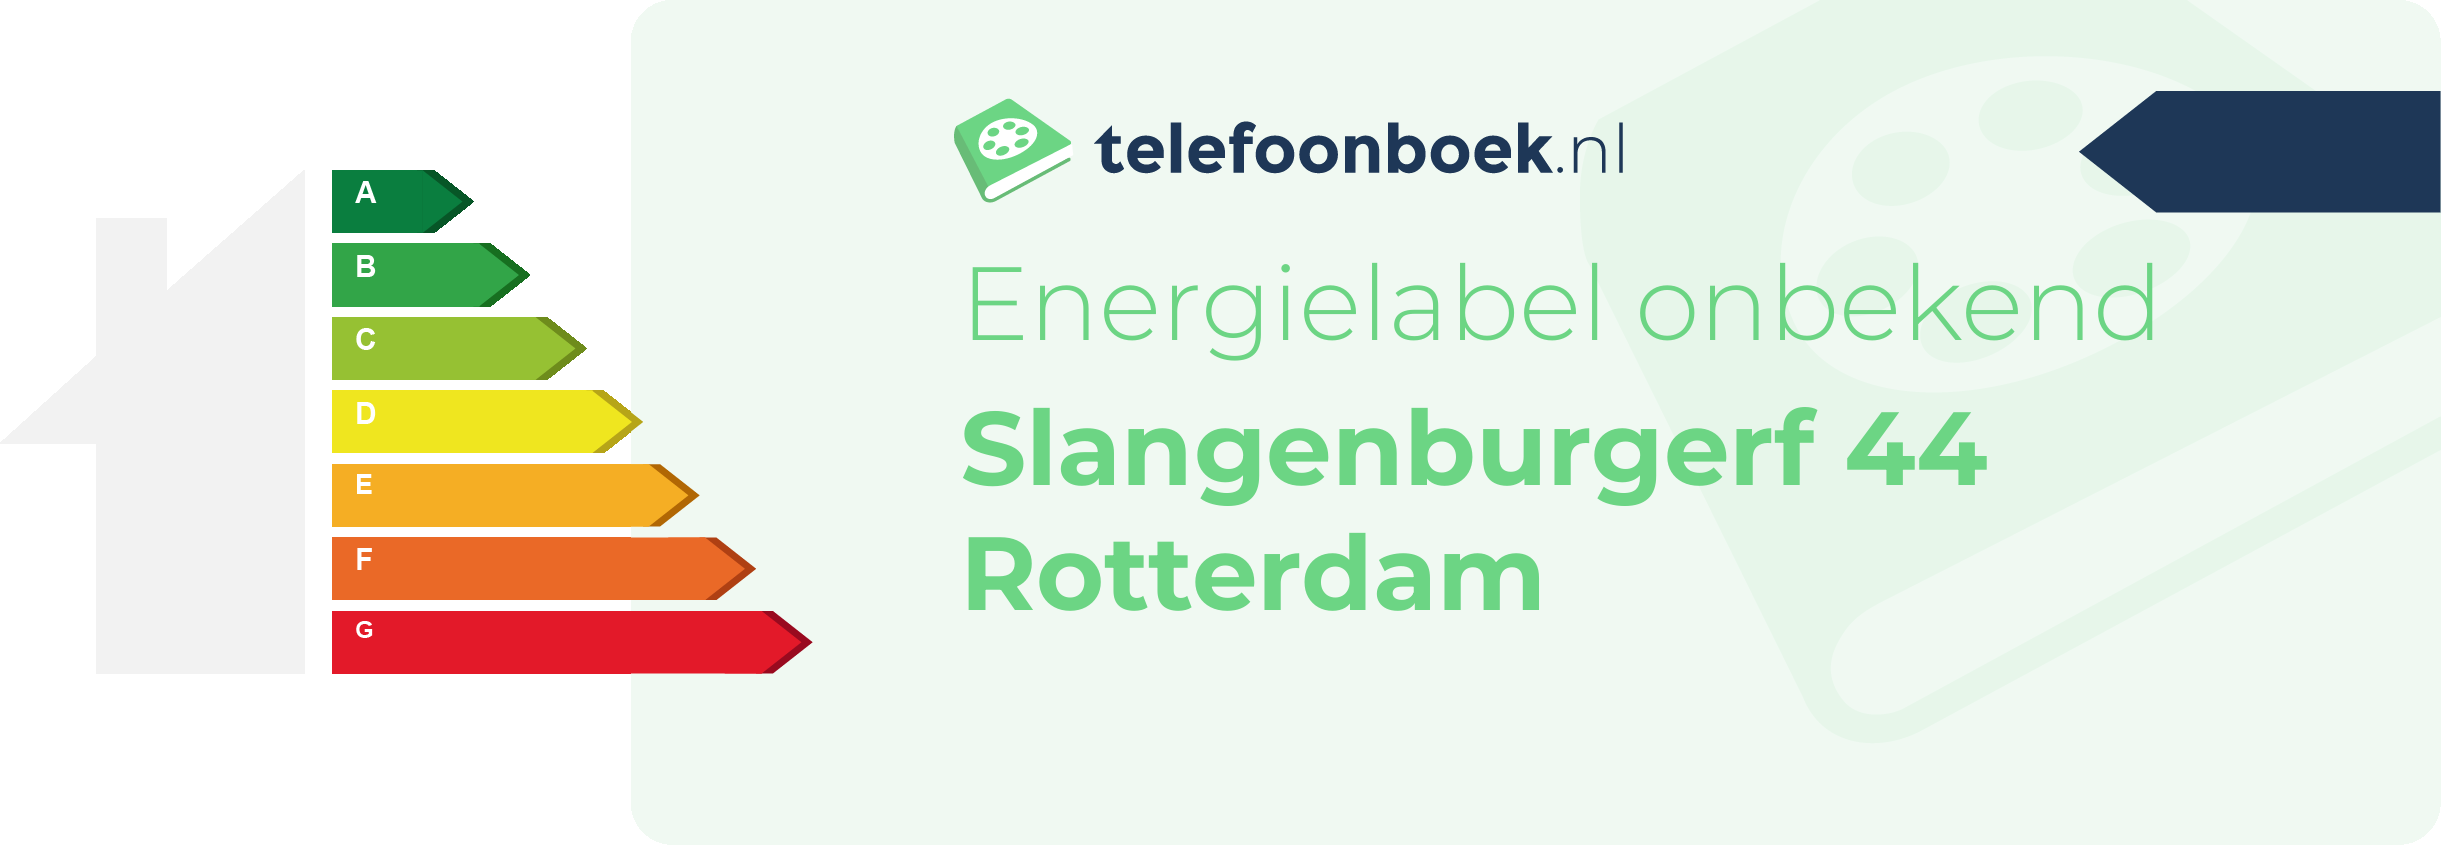 Energielabel Slangenburgerf 44 Rotterdam